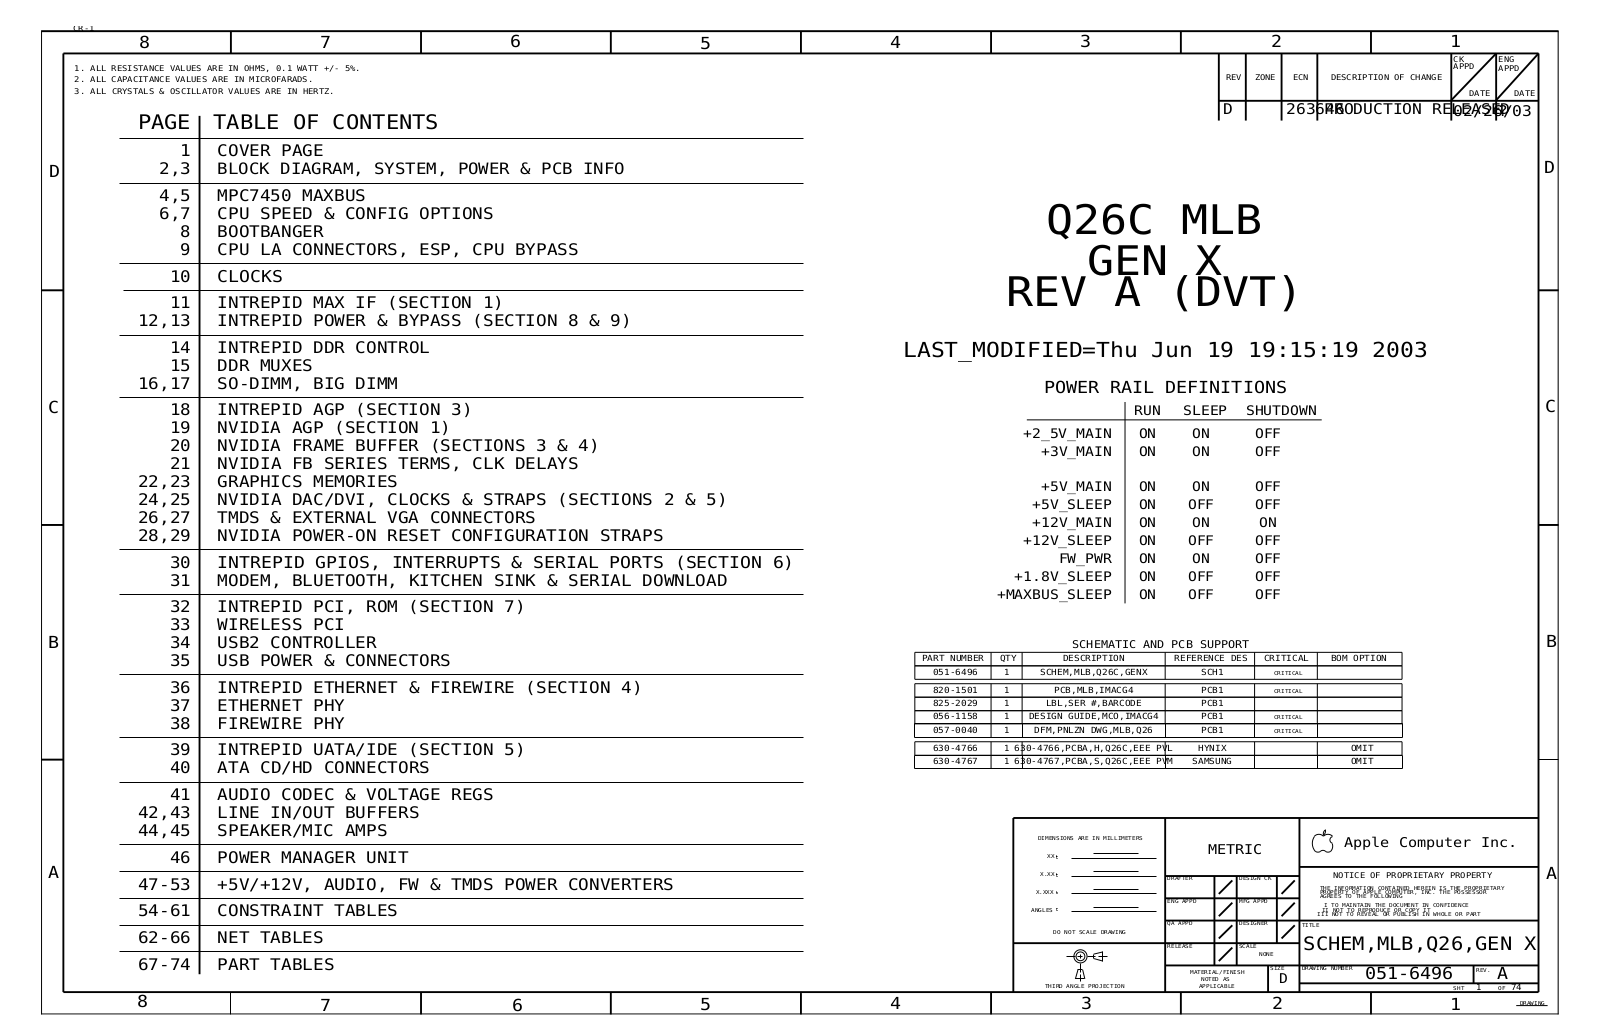 Apple iMac G4 Q26C DVT MLB GEN X 051-6490 RevA Schematic